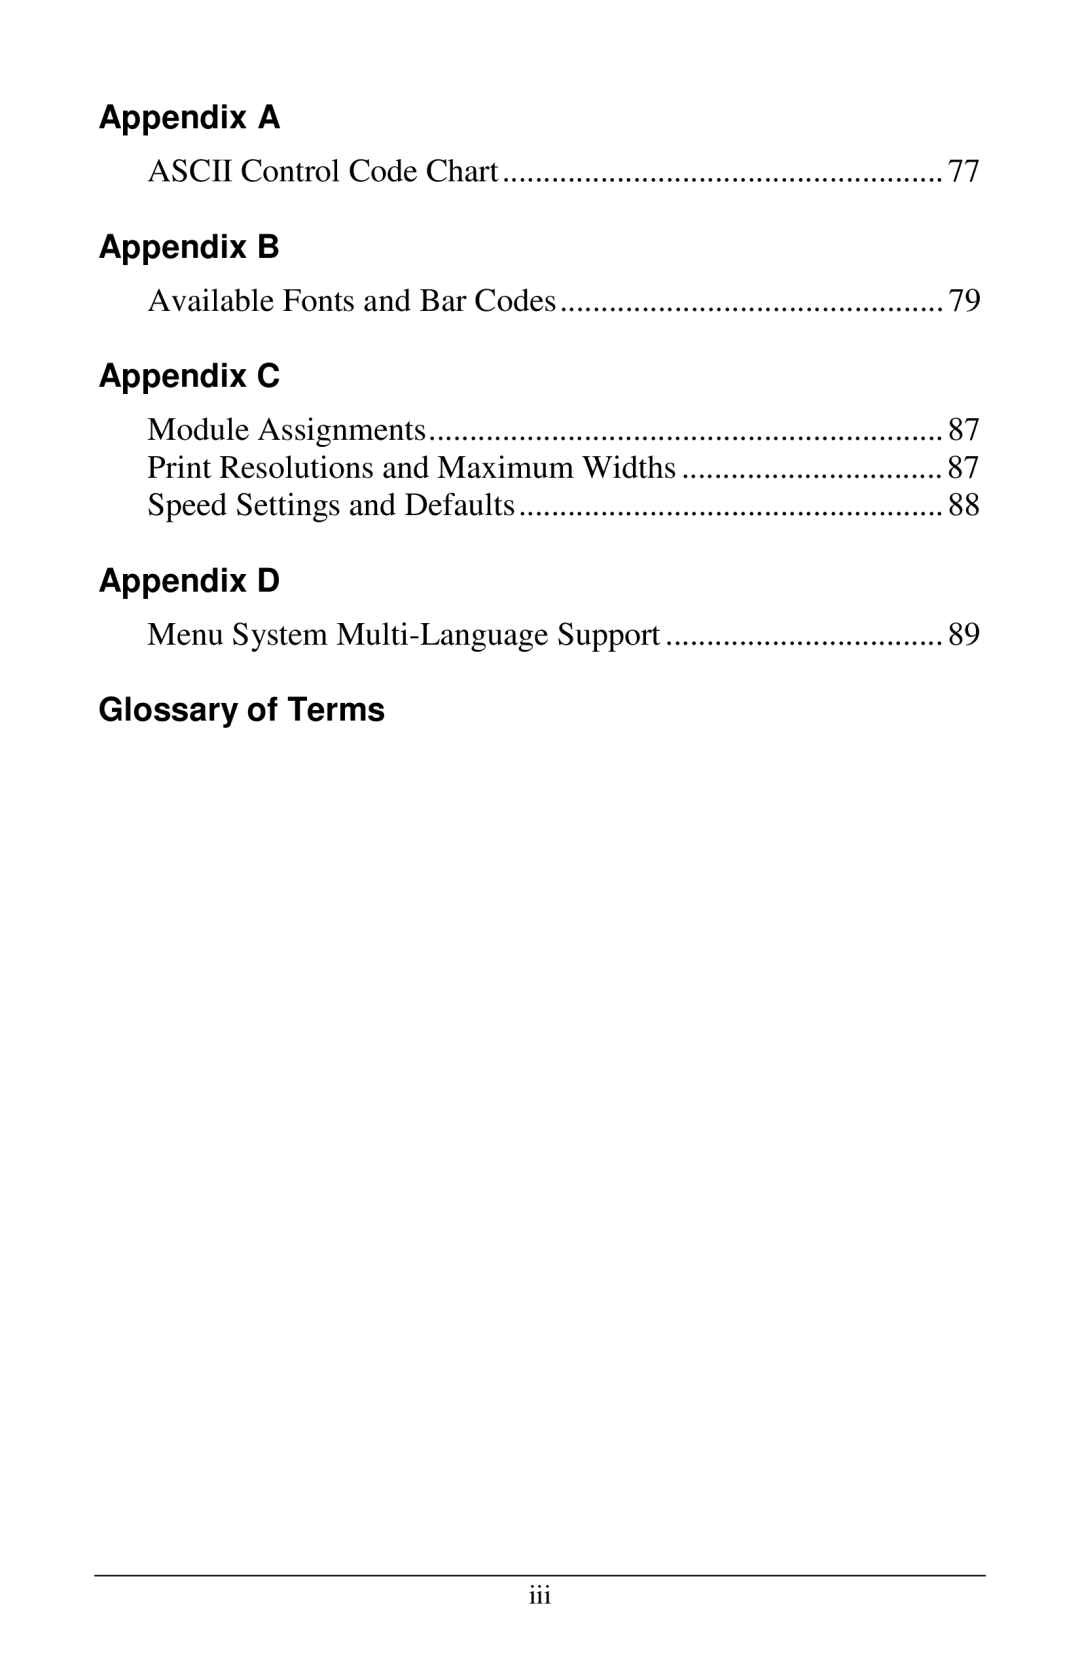 Pitney Bowes J693 manual Appendix A, Appendix B, Appendix C, Appendix D, Glossary of Terms 